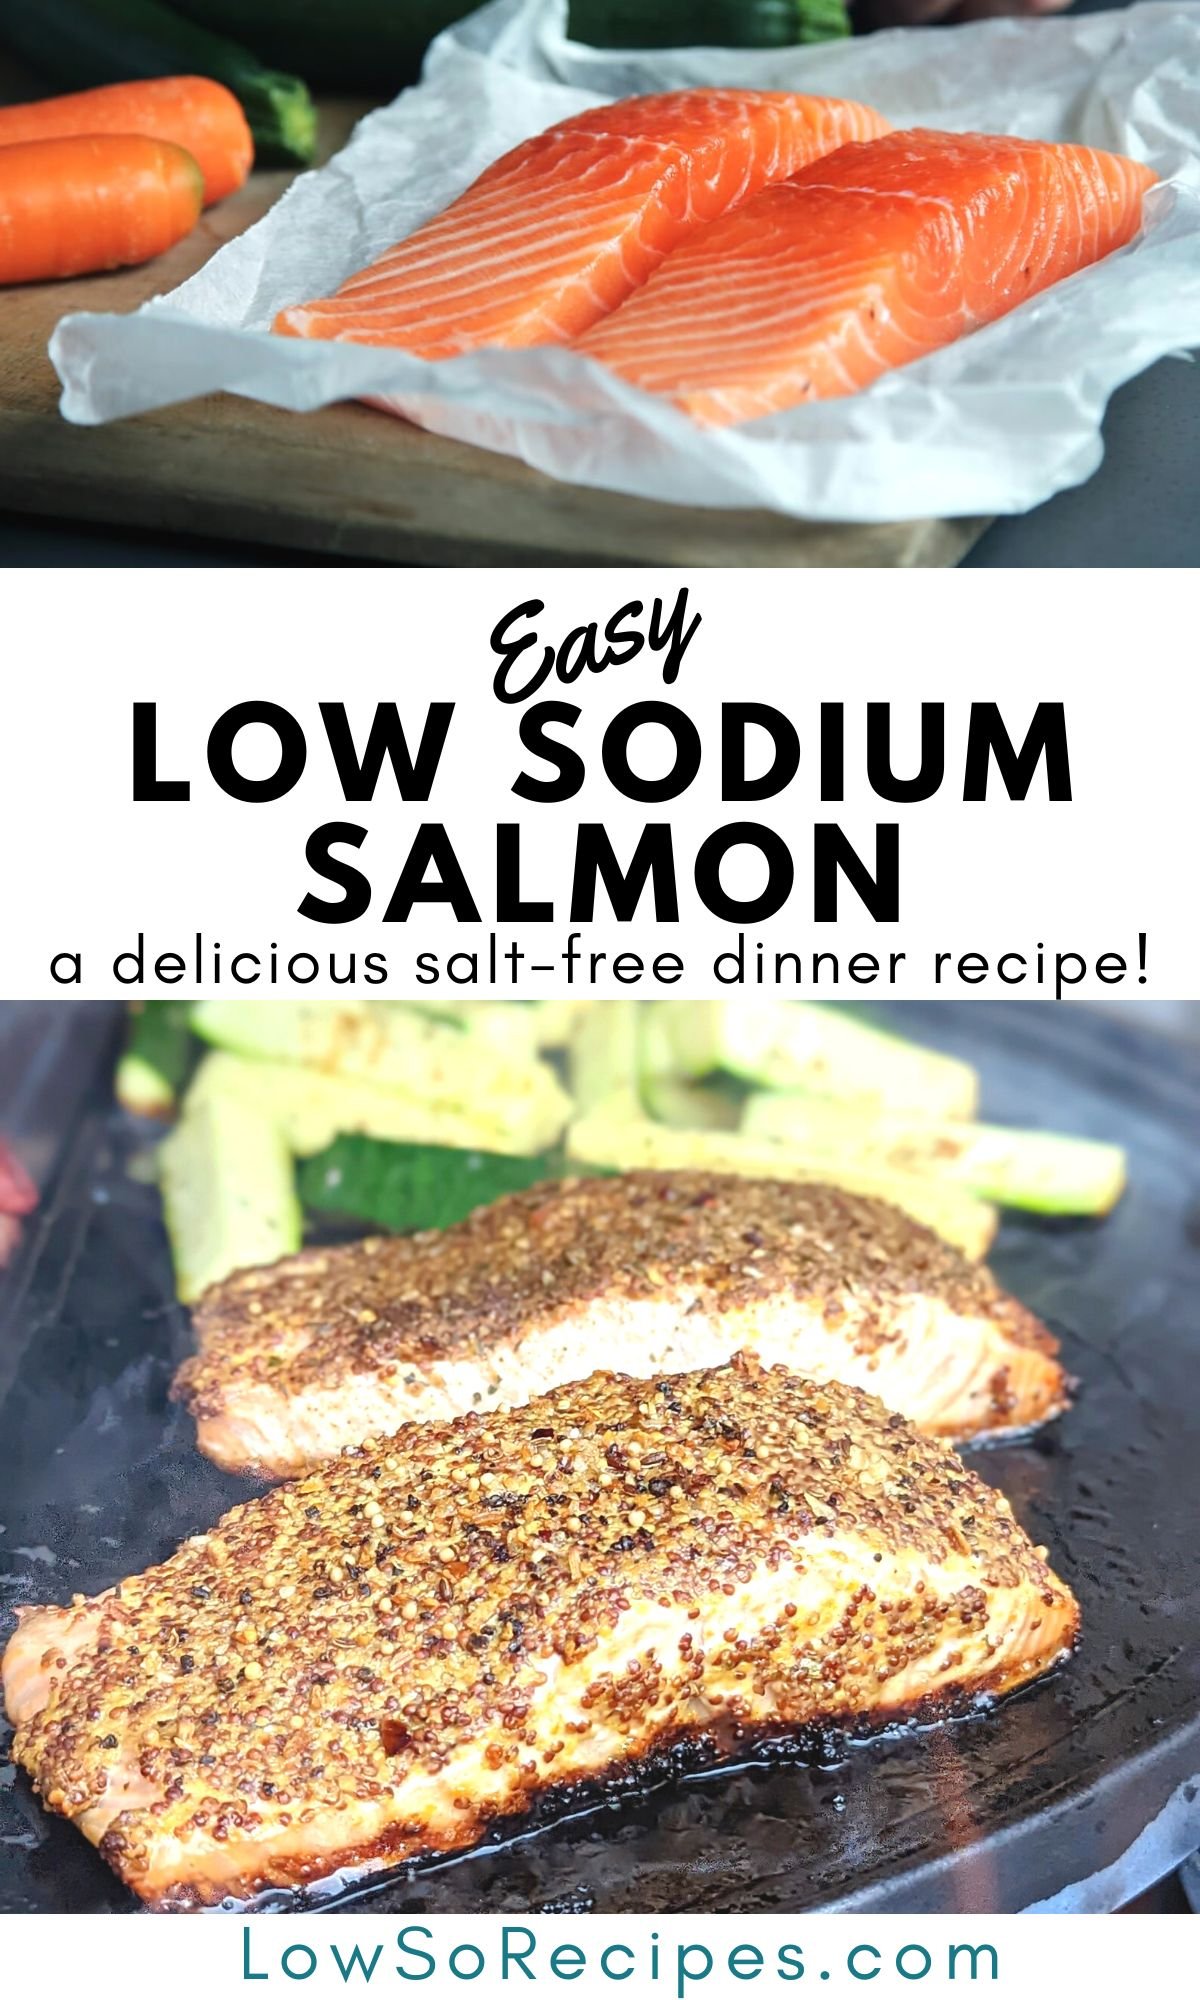 low sodium salmon recipe with mustard steak spice and herbs no salt salmon recipe